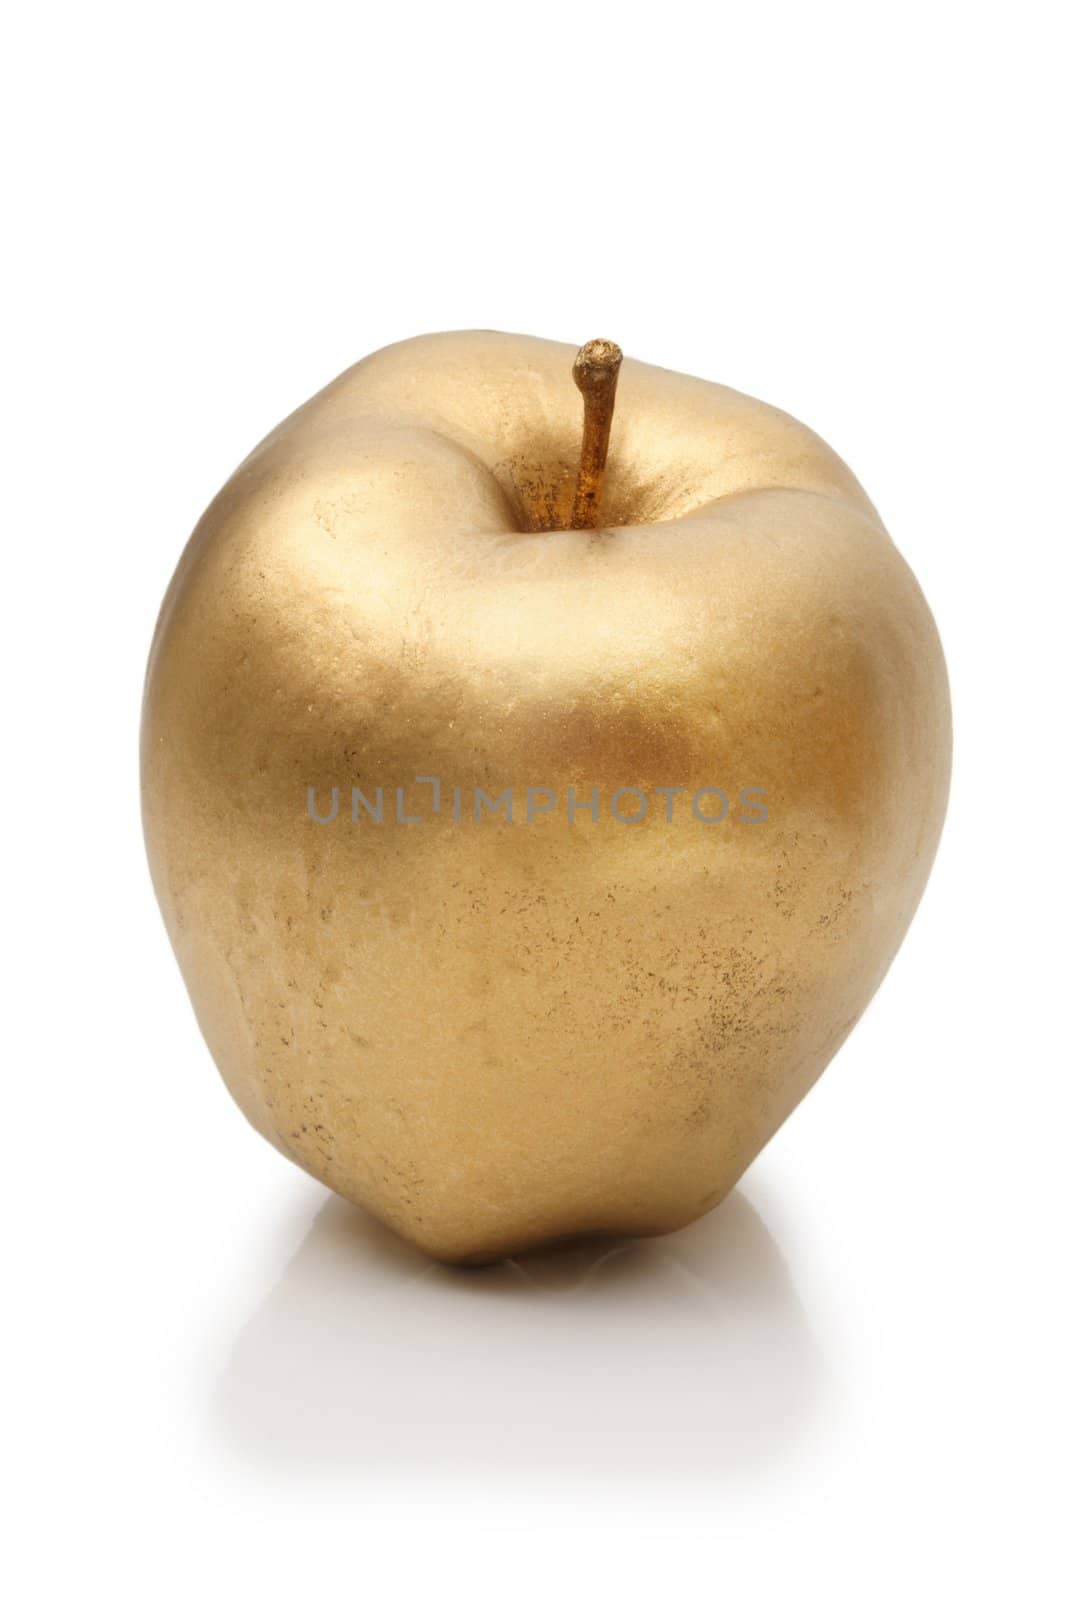 Metallic gold apple on white background